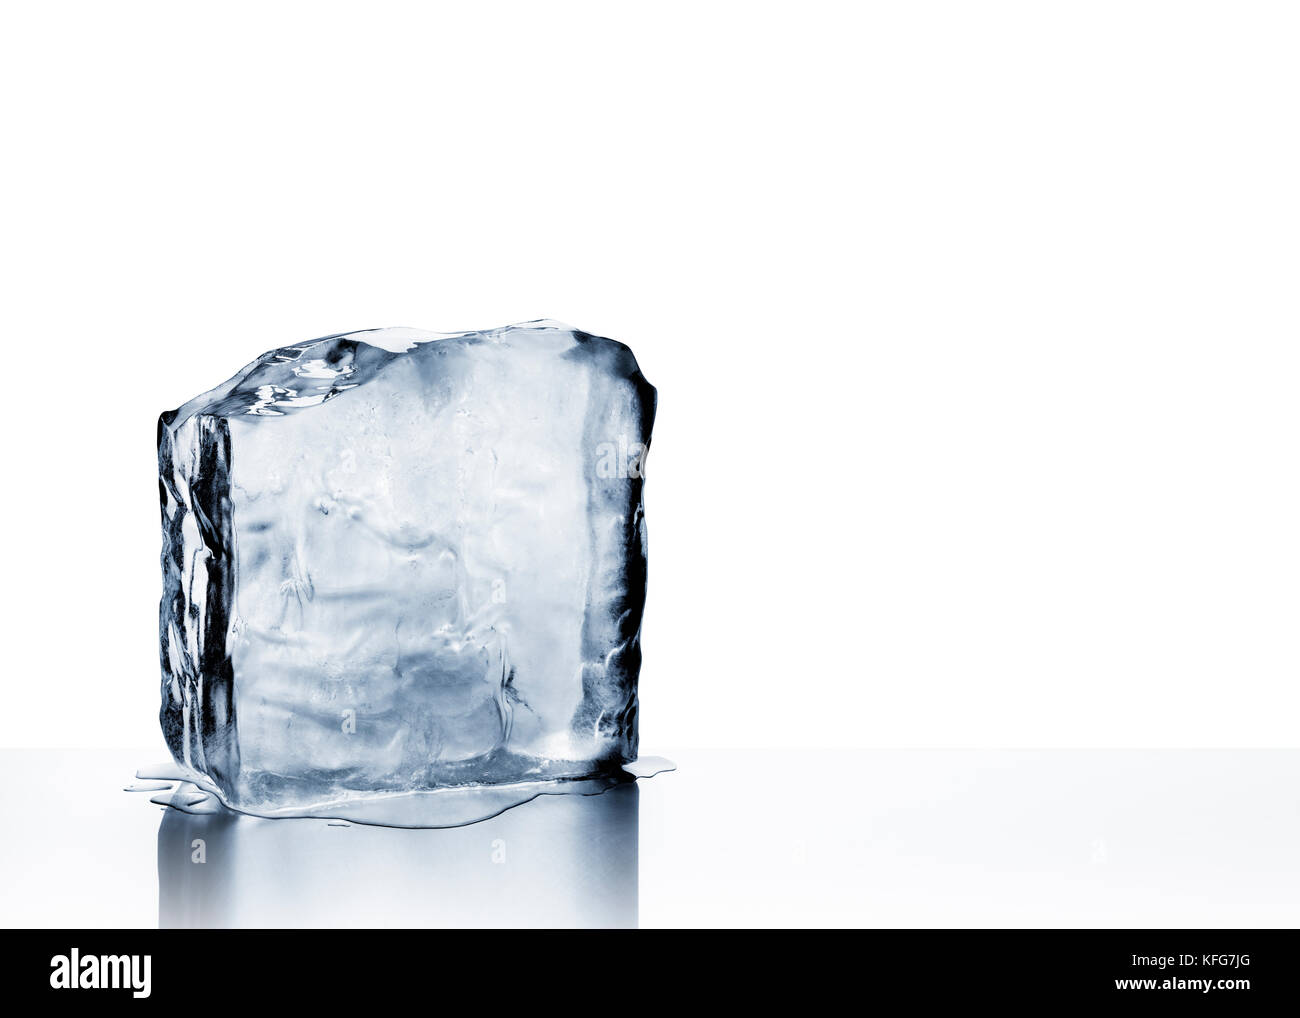 Clear cold. Плавленный лед. Ice Cubes melting. Блоки льда картинки на белом фоне. Блок льда hand Paint.